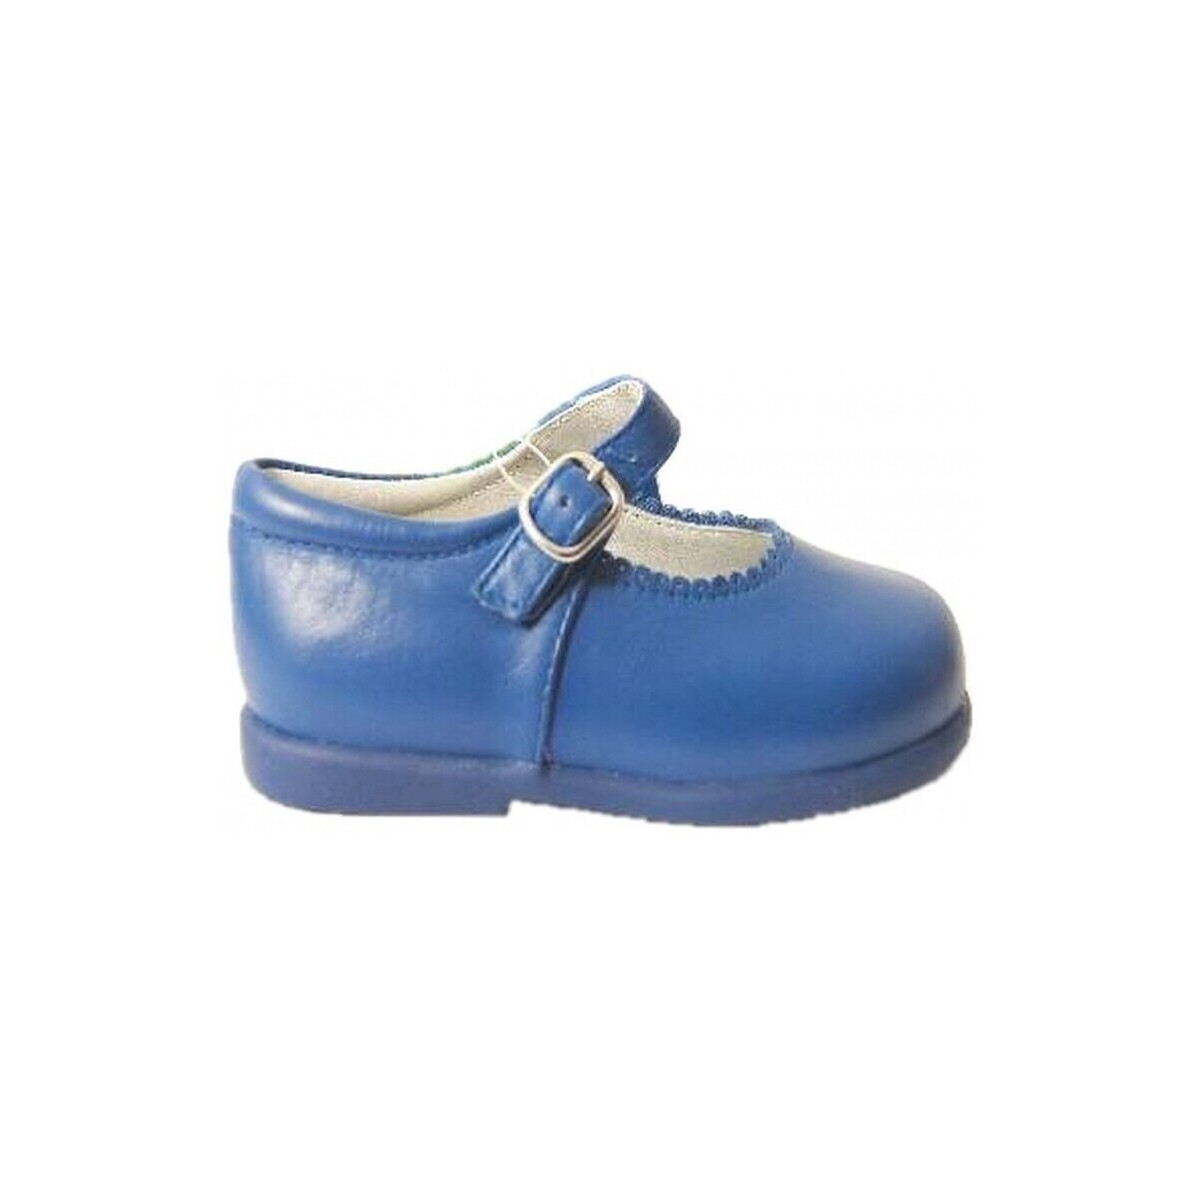 Schuhe Mädchen Ballerinas Bambineli 12090-18 Blau